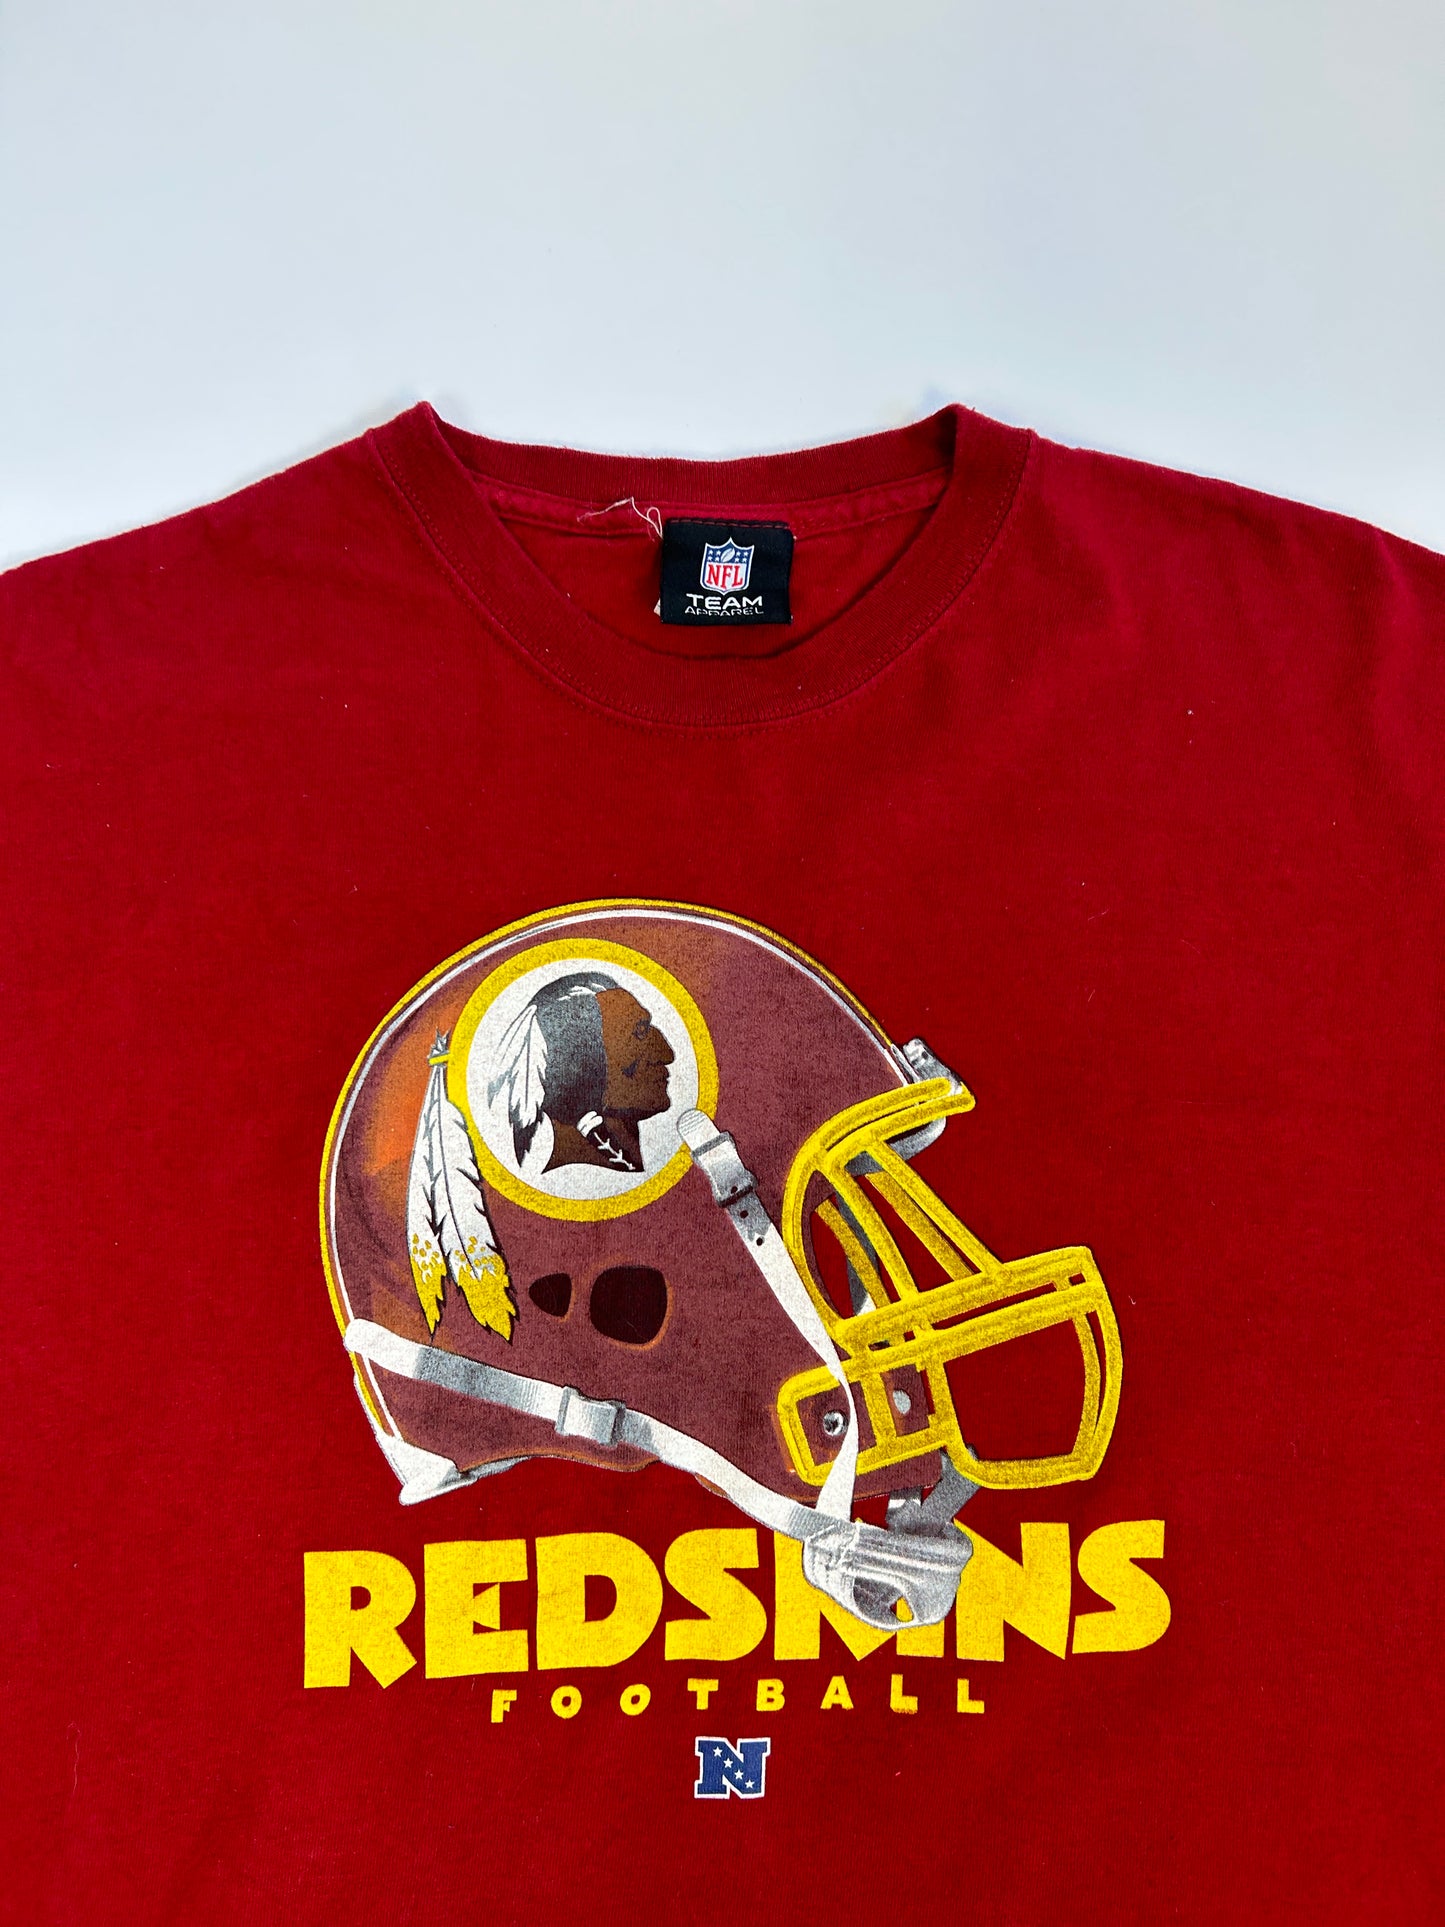 Redskins Football T-shirt - L